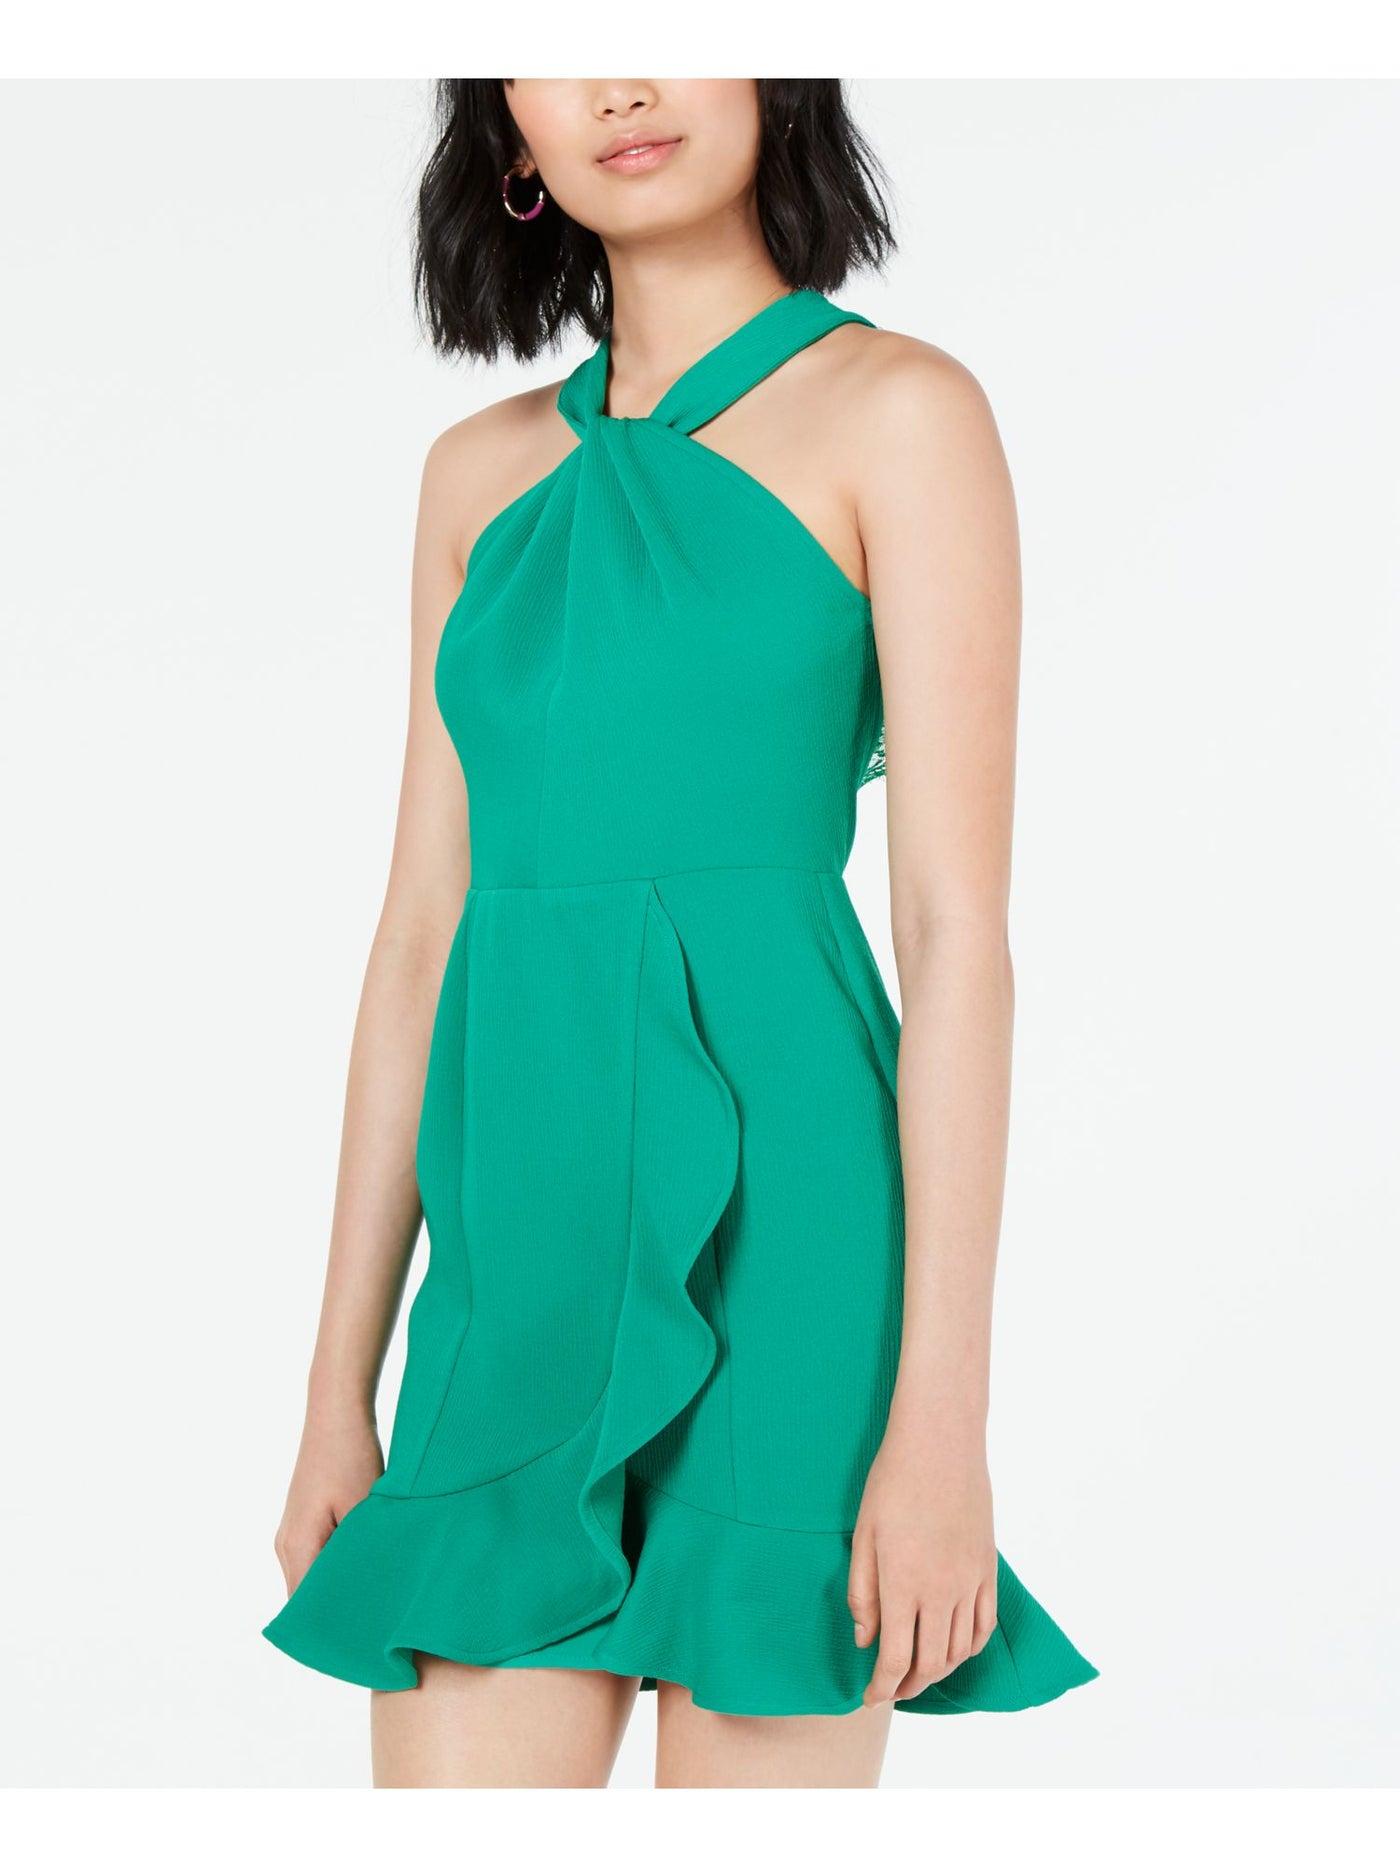 19 COOPER Womens Green Lace Ruffled Sleeveless Halter Mini Party Shift Dress XS